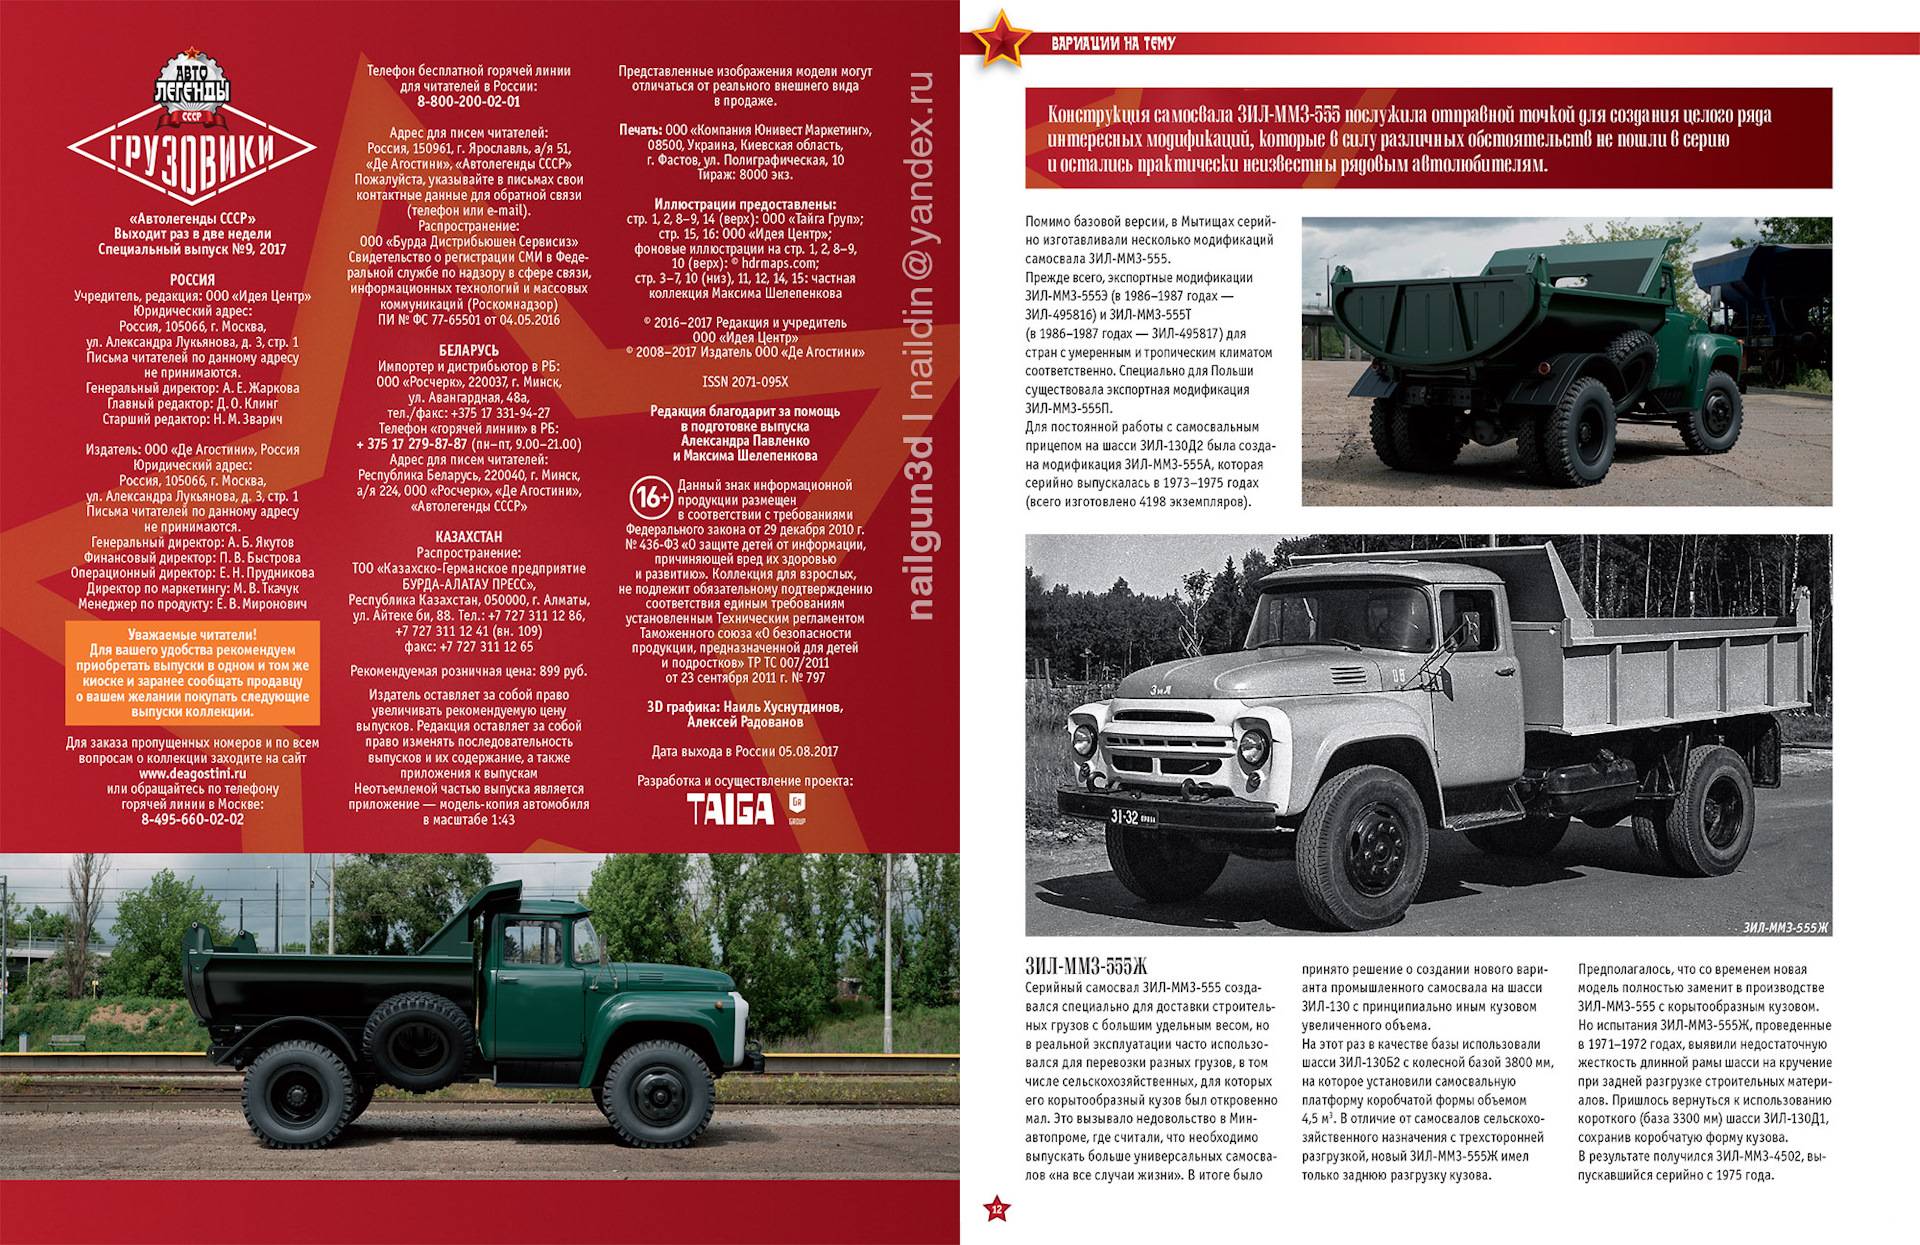 Зил-130 - технические характеристики и особенности грузовика